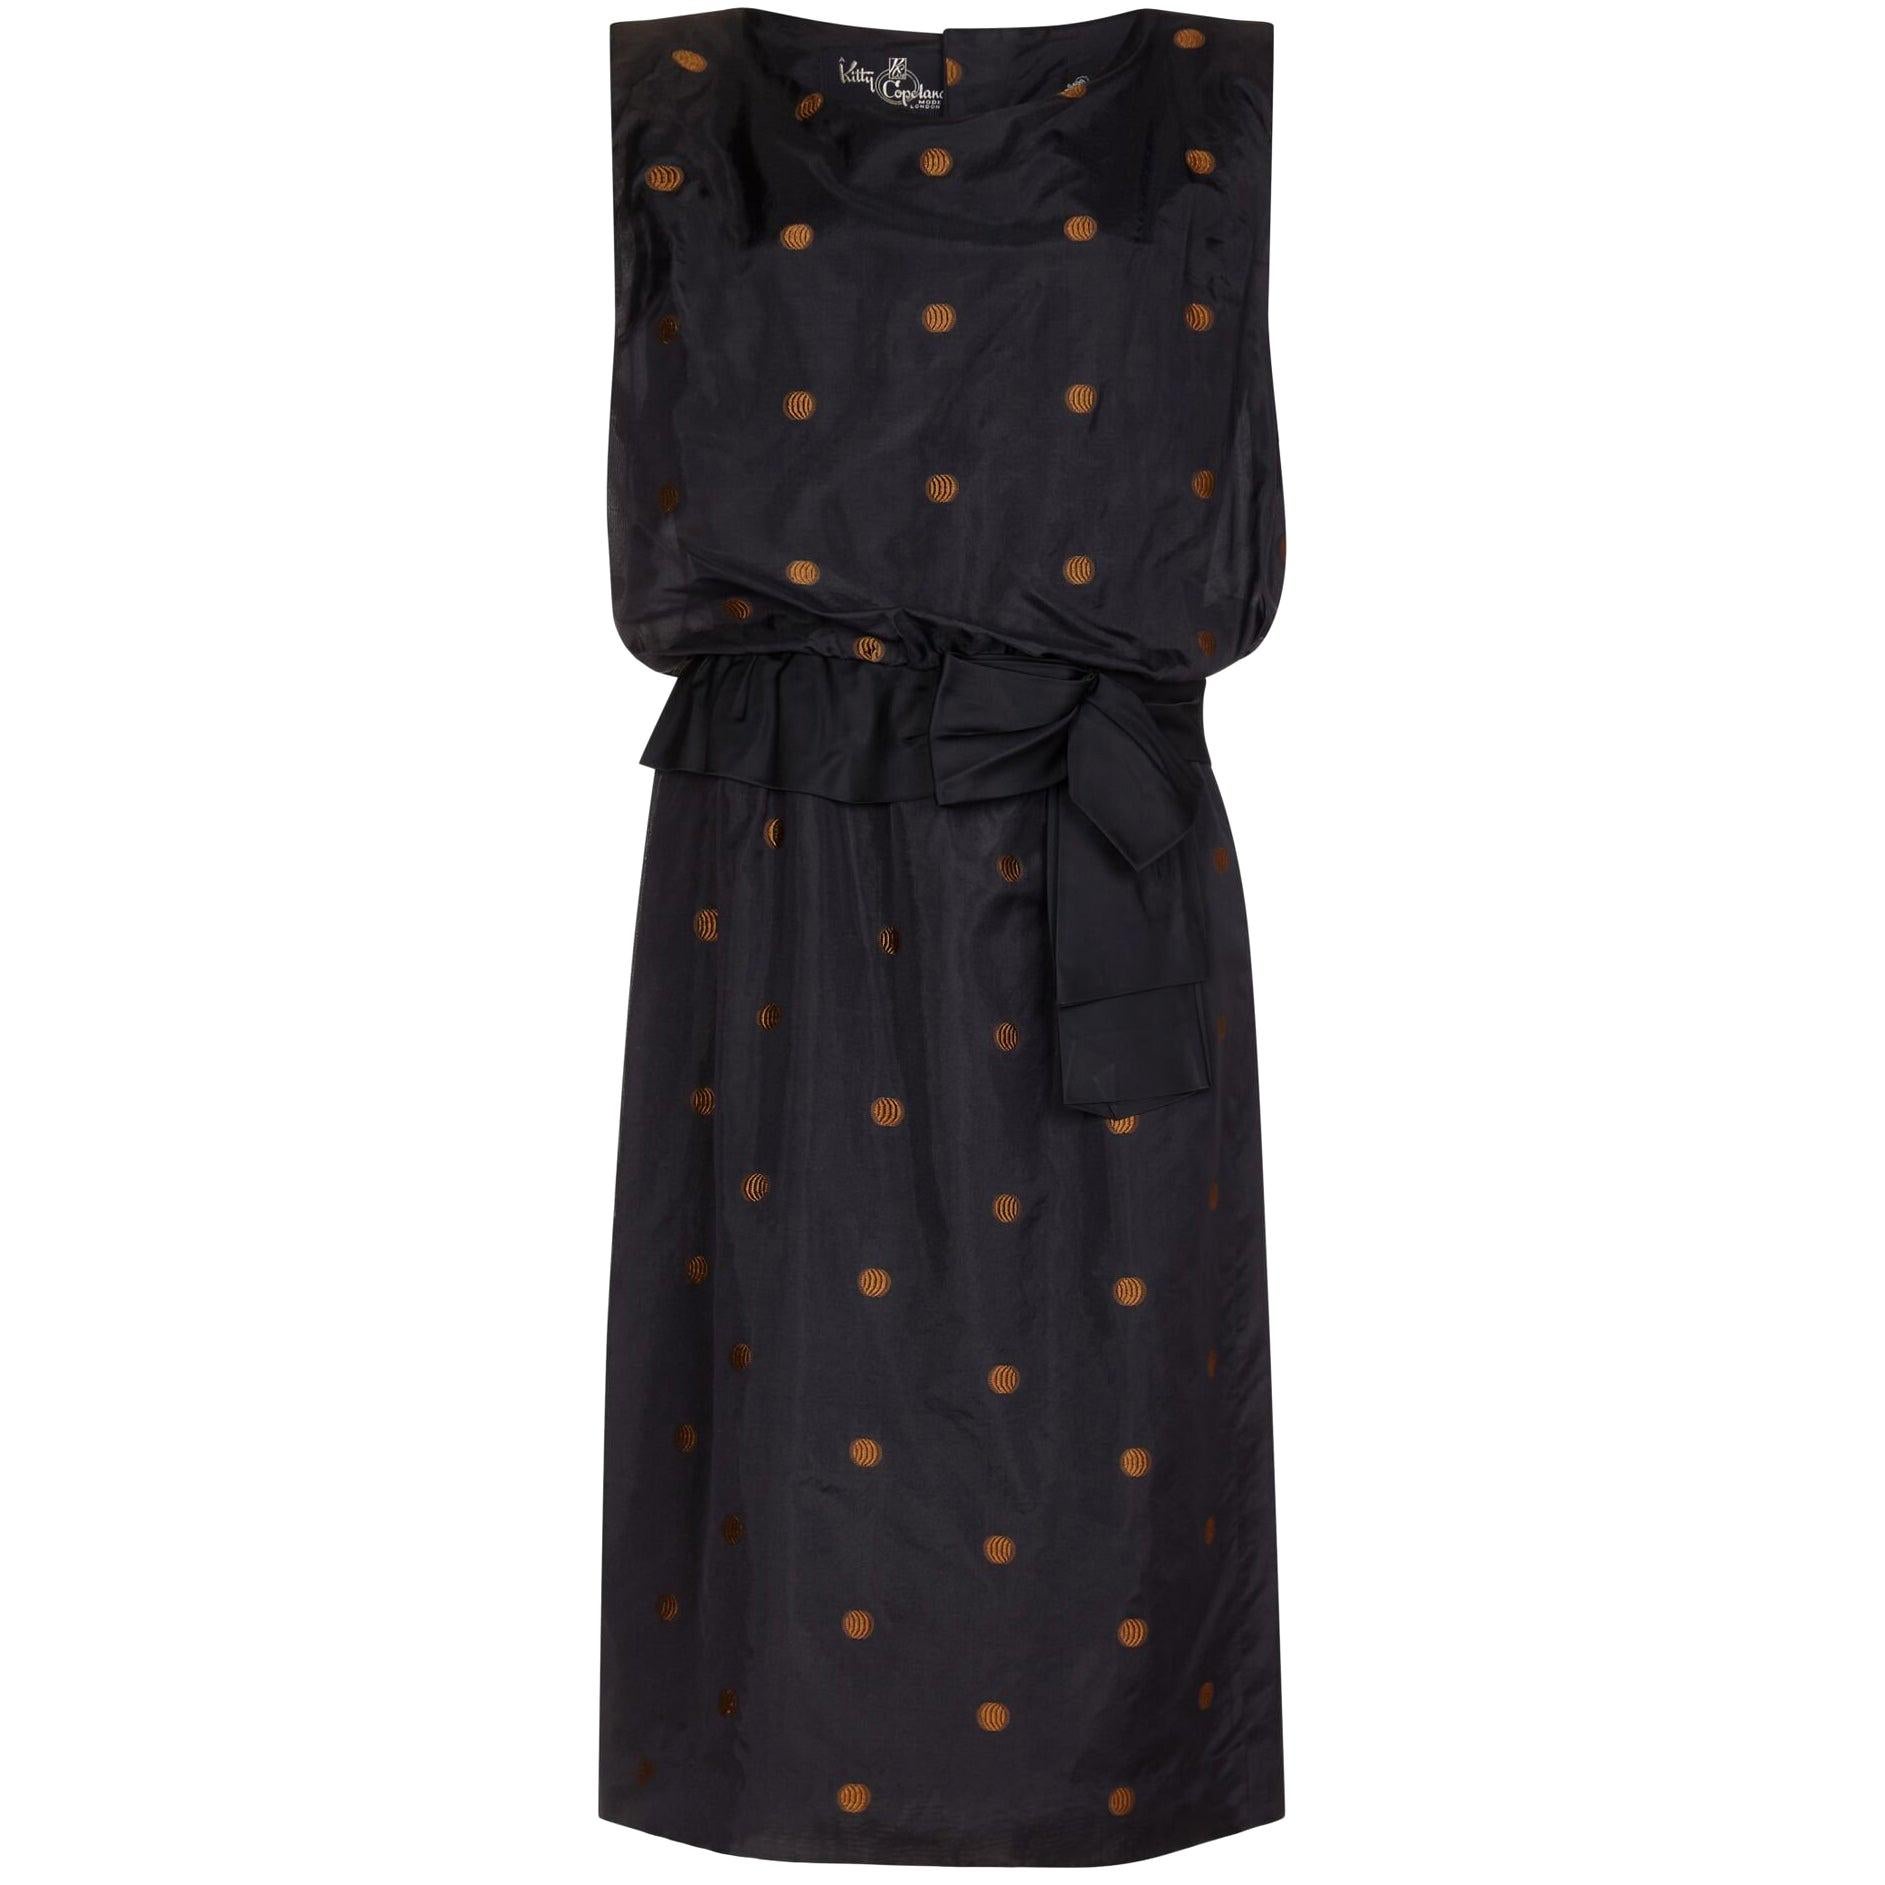 Kitty Copeland 1950s Black Taffeta Silk Dress With Polkadot Detail For Sale